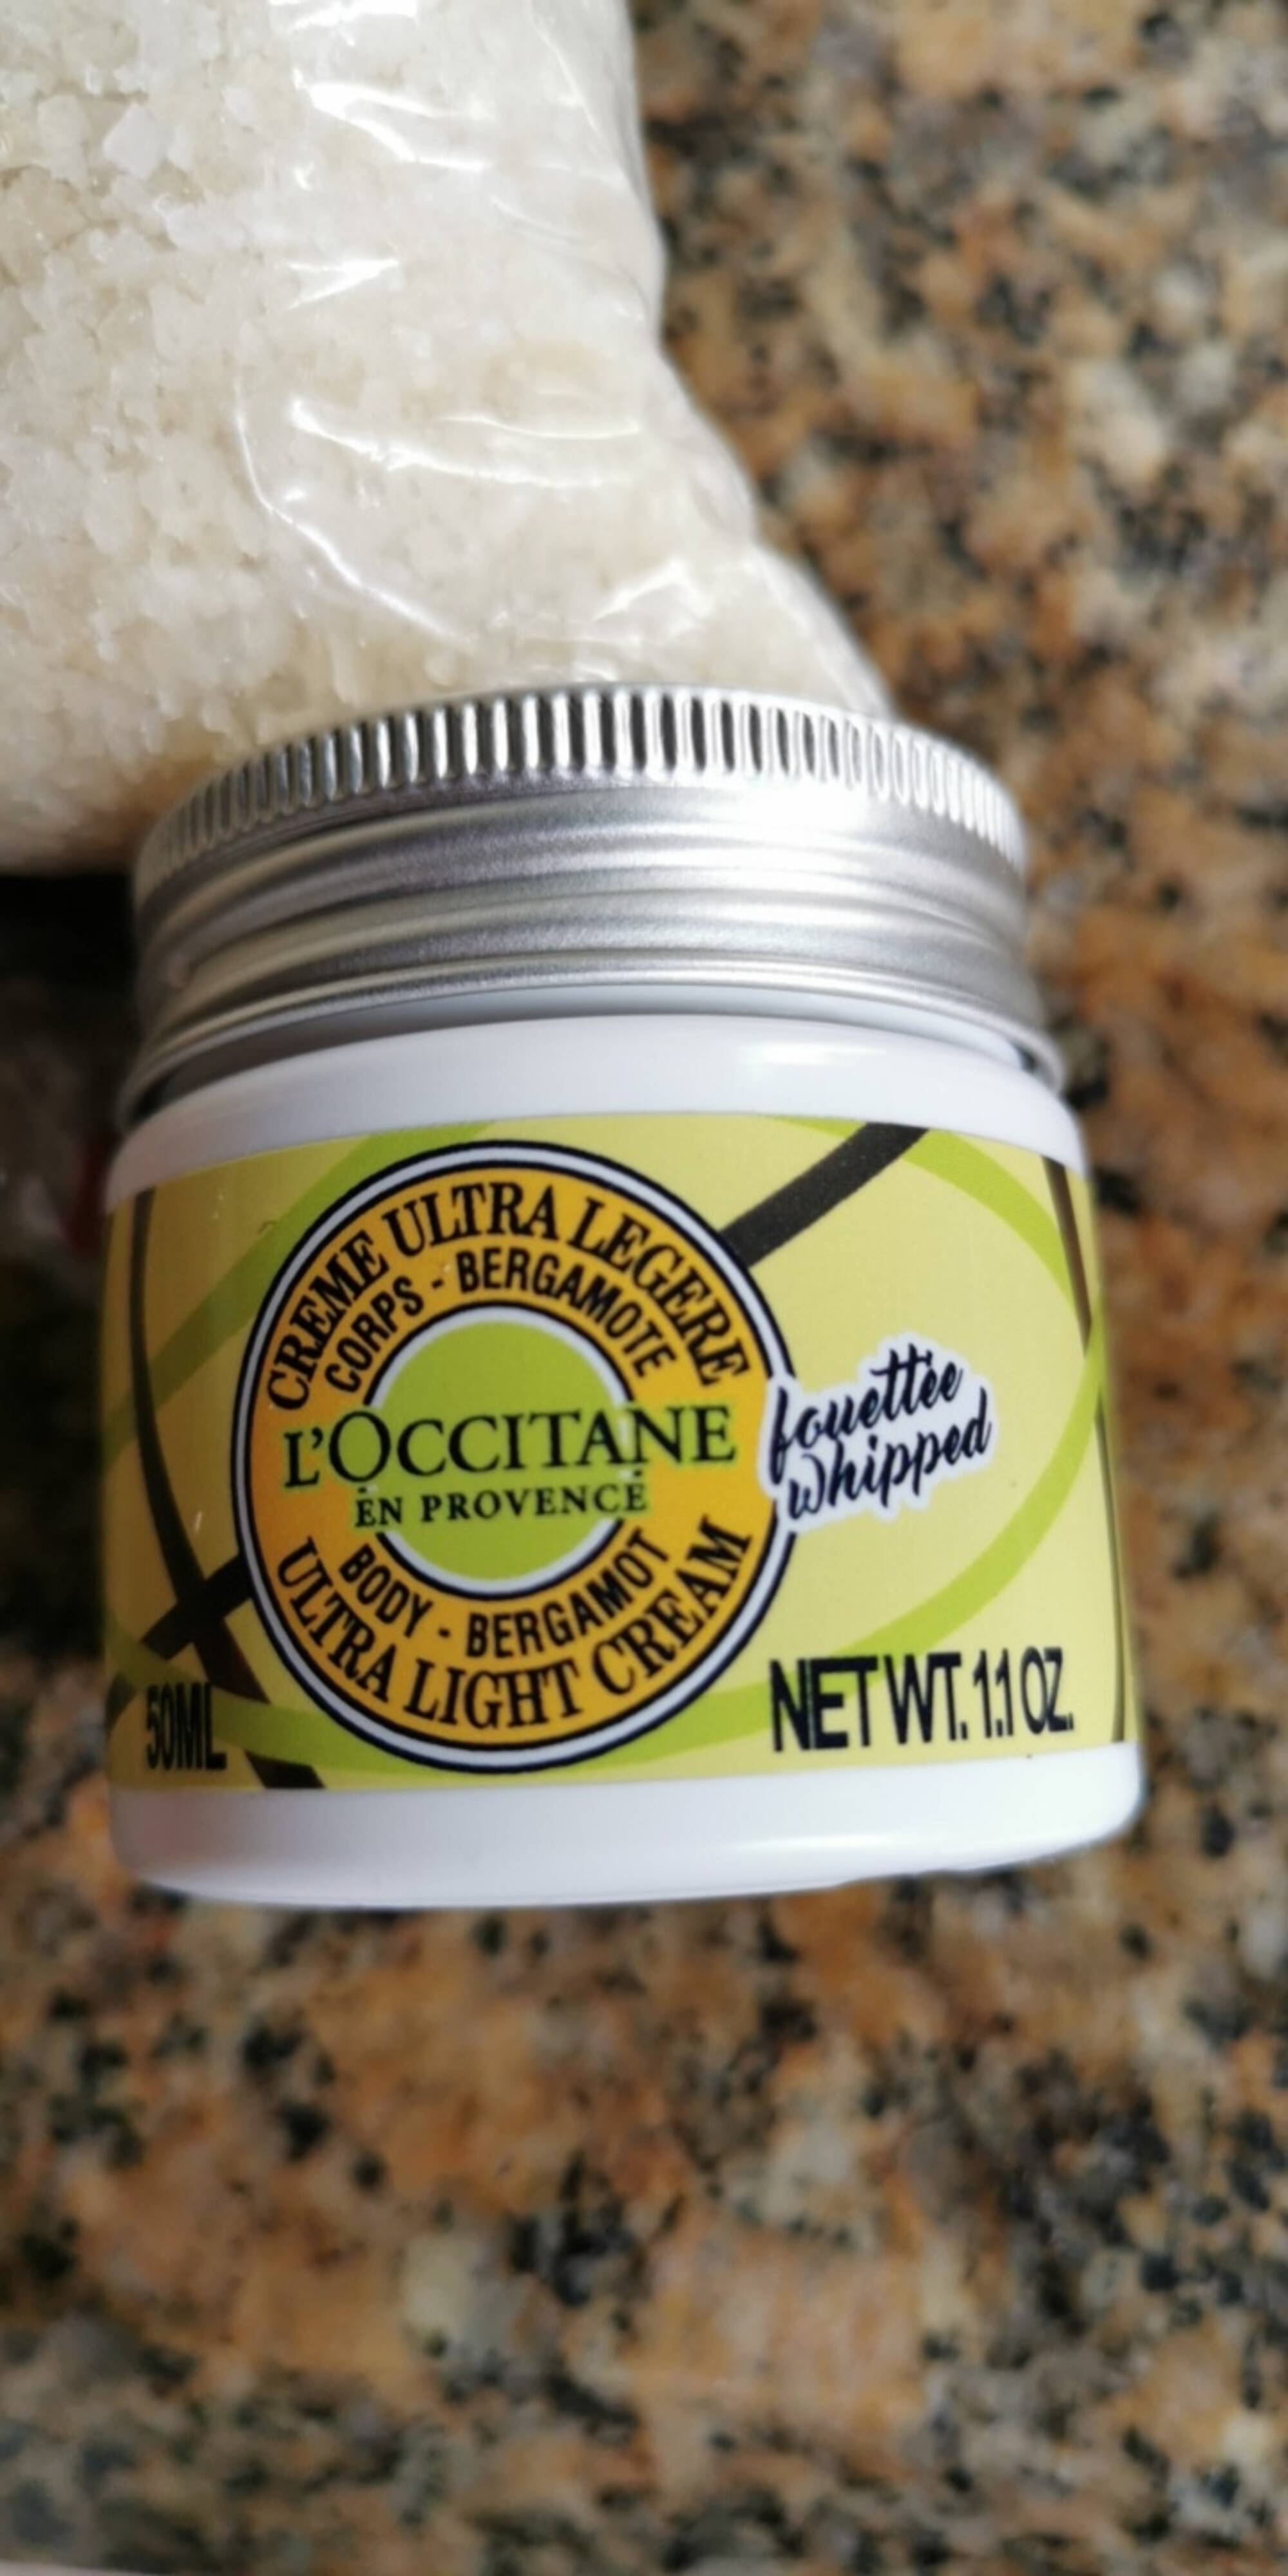 L'OCCITANE - Bergamote - Crème ultra légère corps